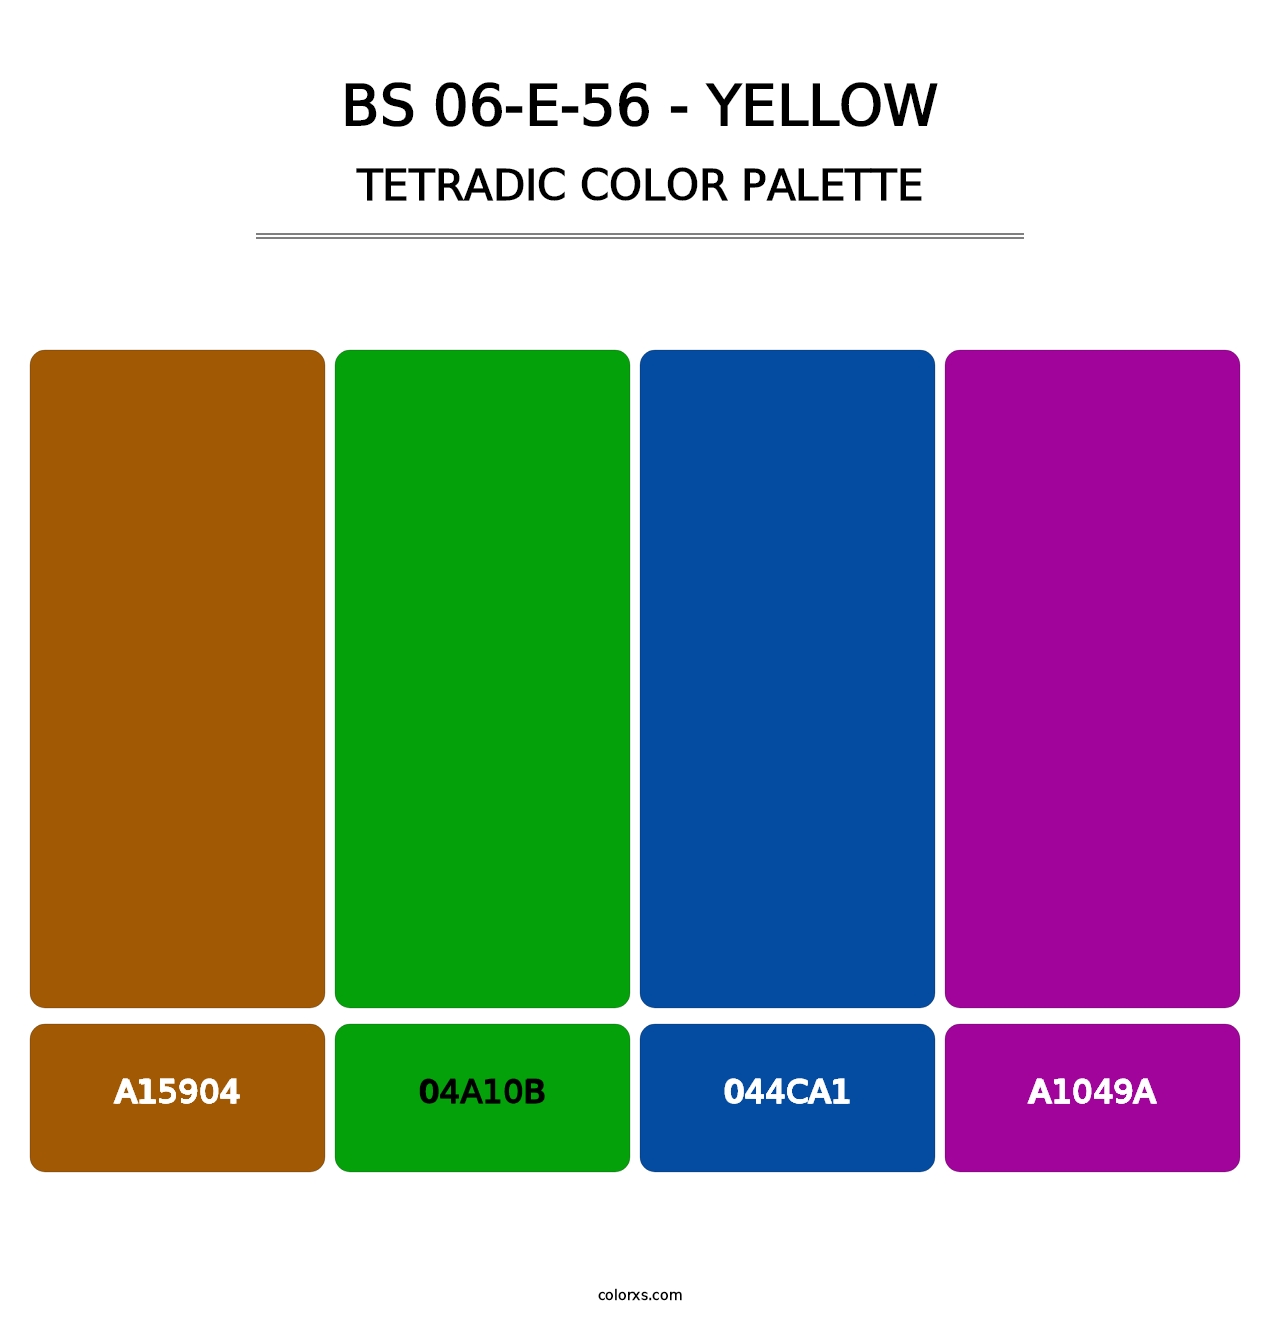 BS 06-E-56 - Yellow - Tetradic Color Palette